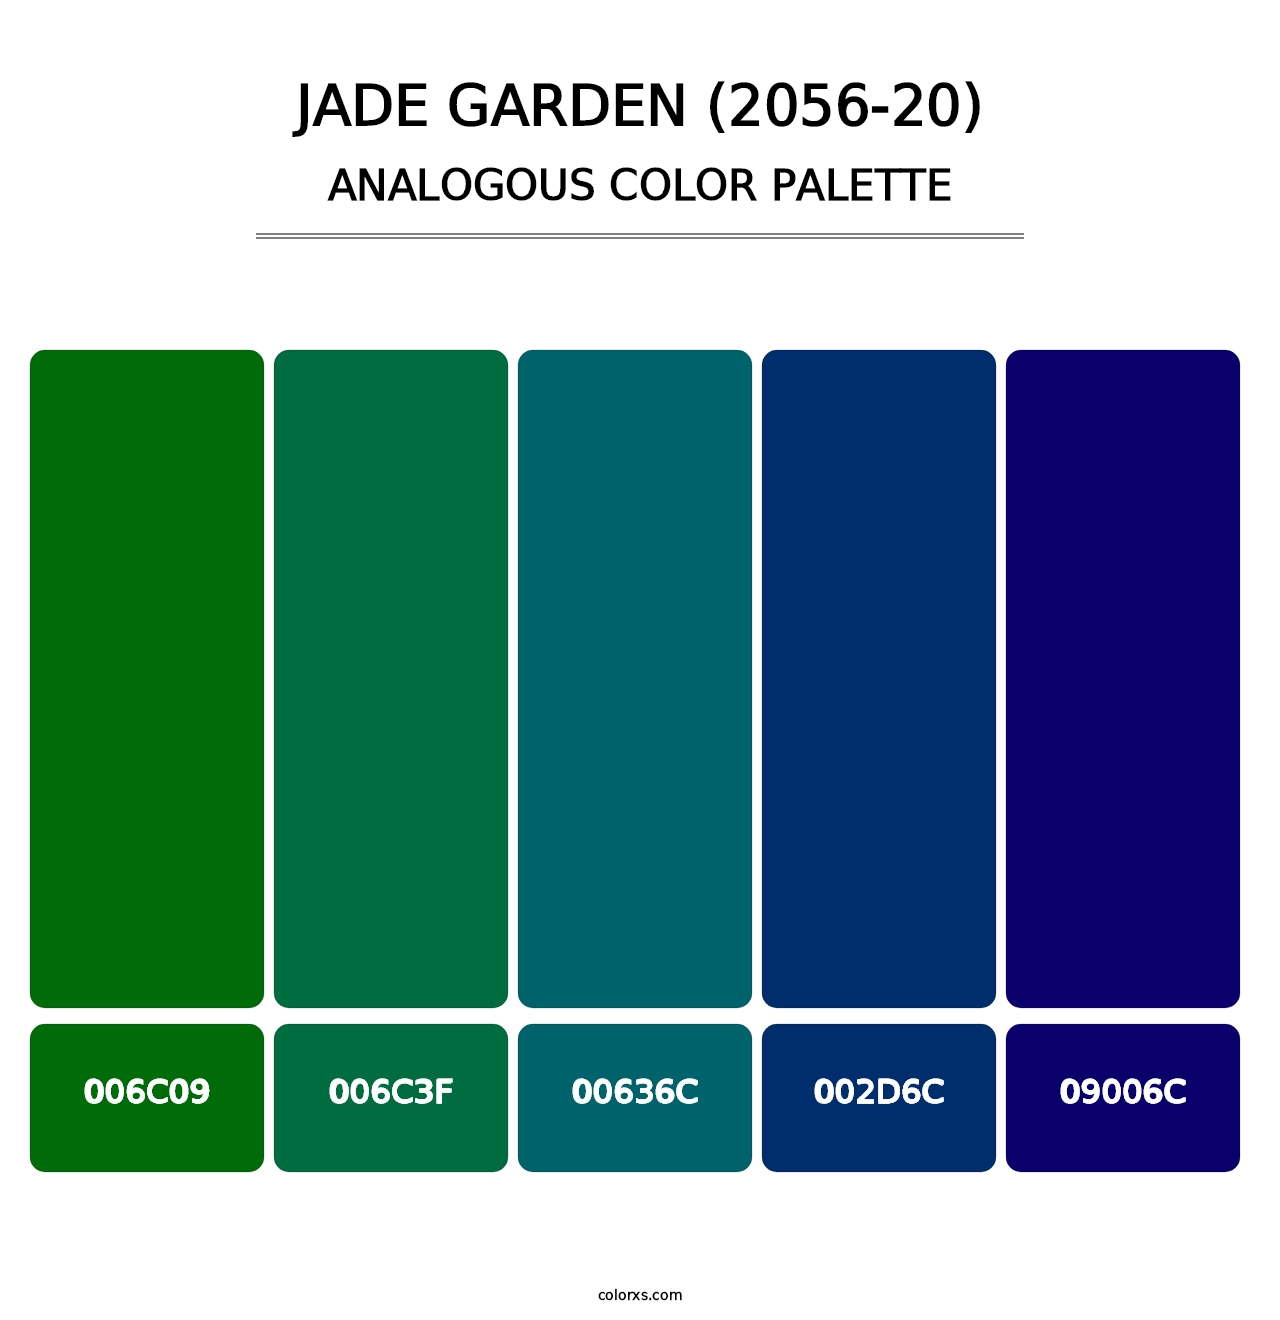 Jade Garden (2056-20) - Analogous Color Palette